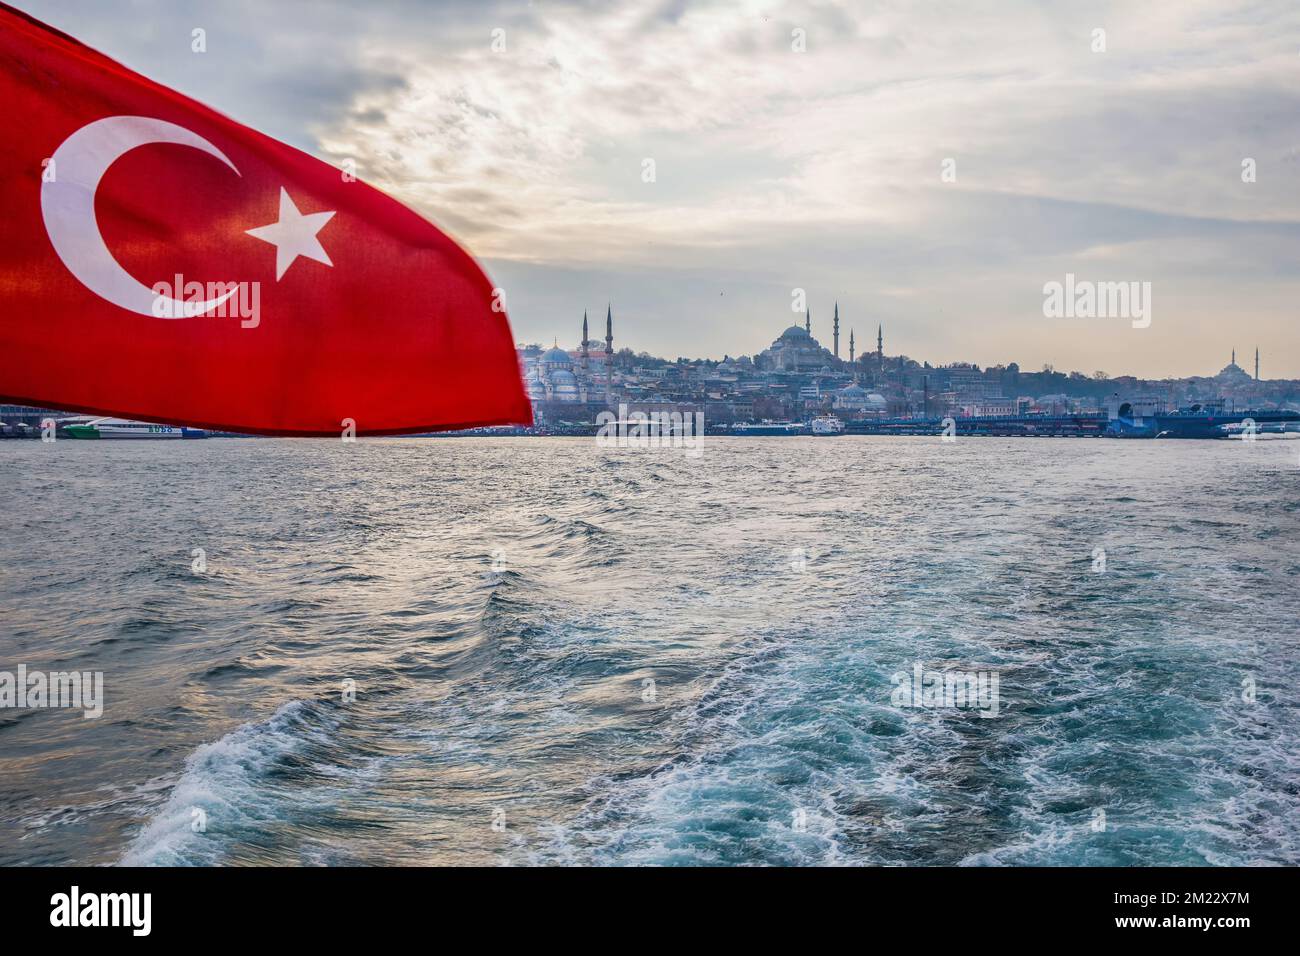 Suleymaniye Mosque nad red flag of Turkey on ferry Eminonu-Kadikoy. Galata bridge at right side Stock Photo